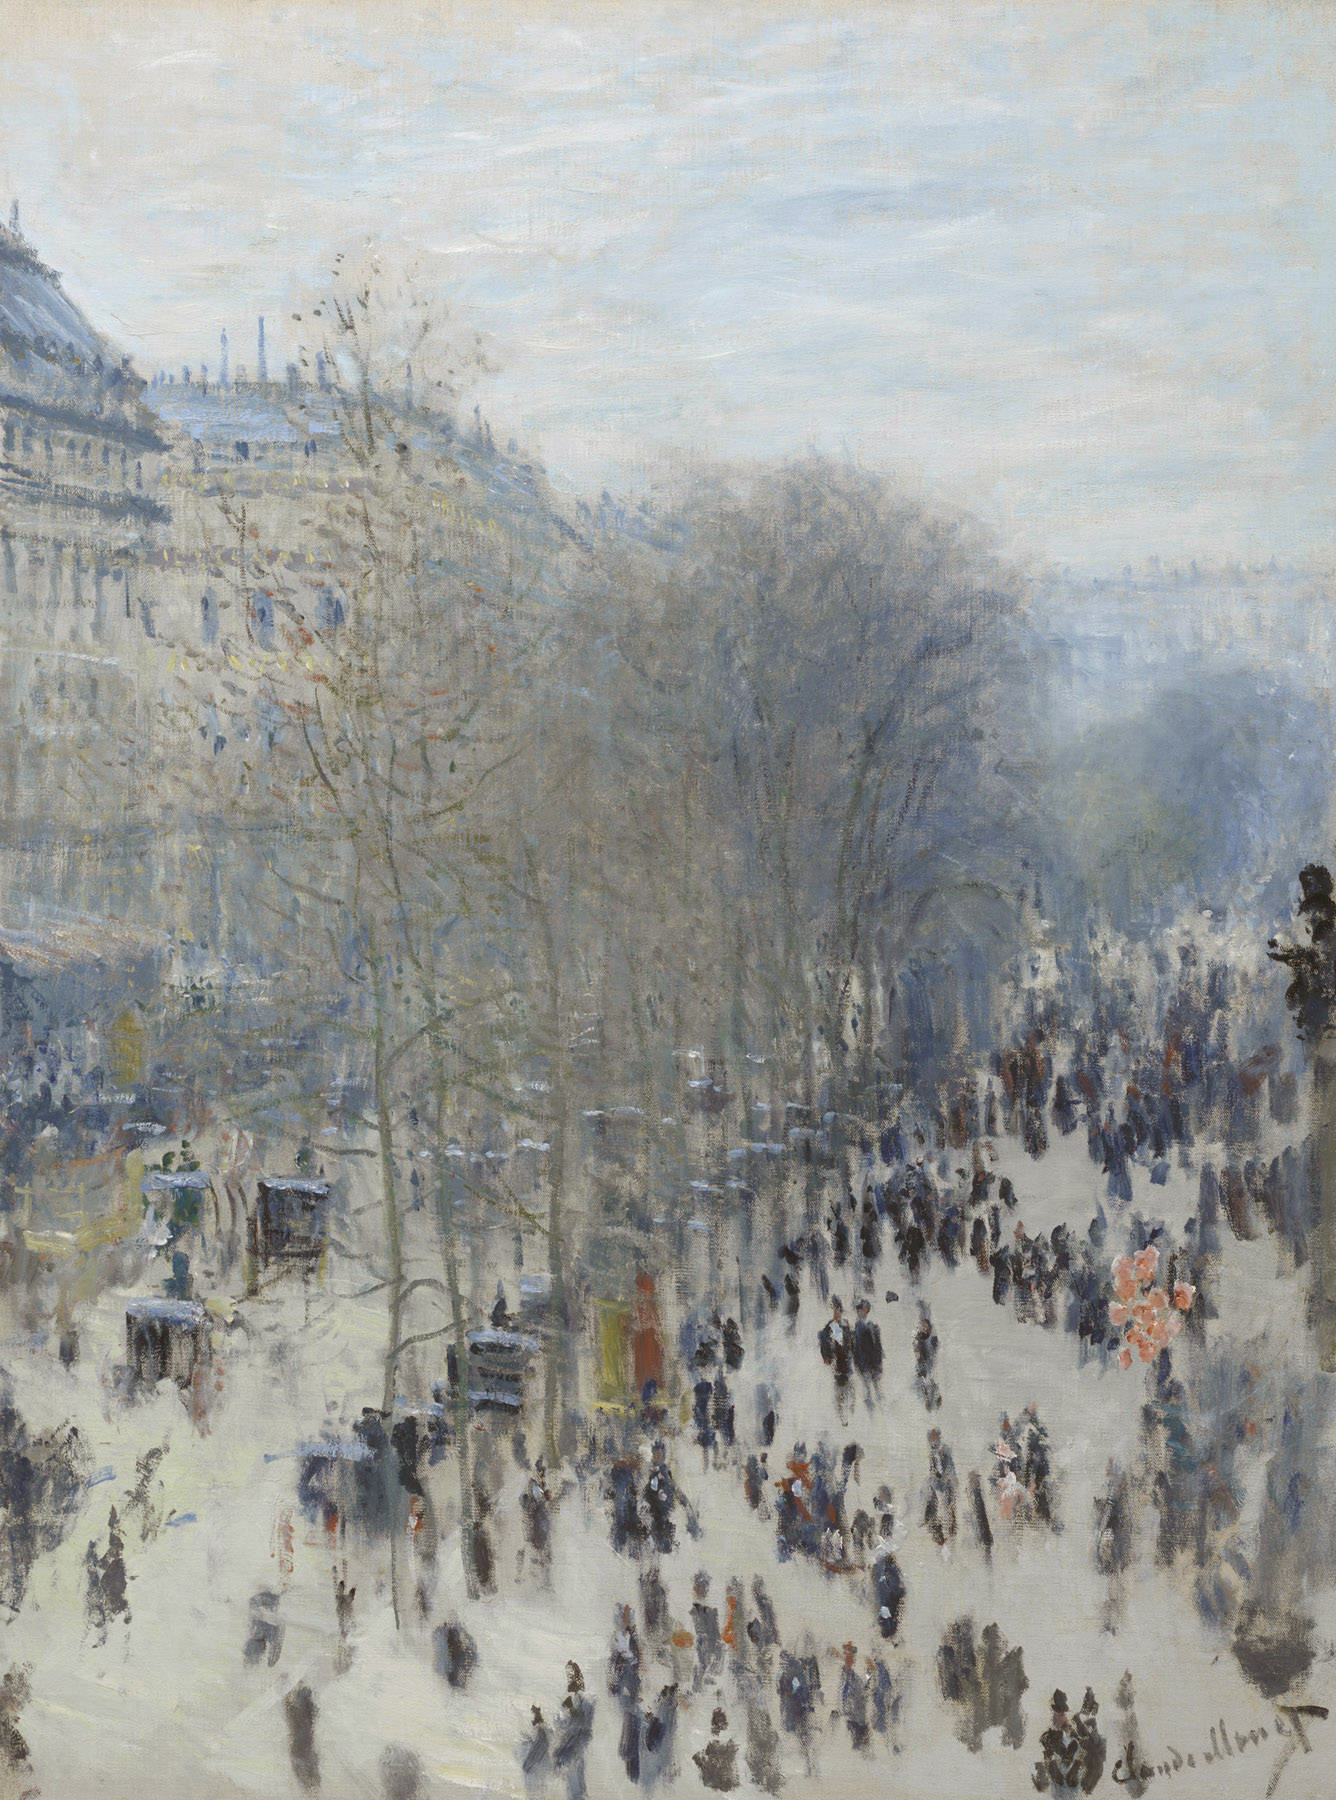 Boulevard des Capucines, Claude Monet, 1873-74